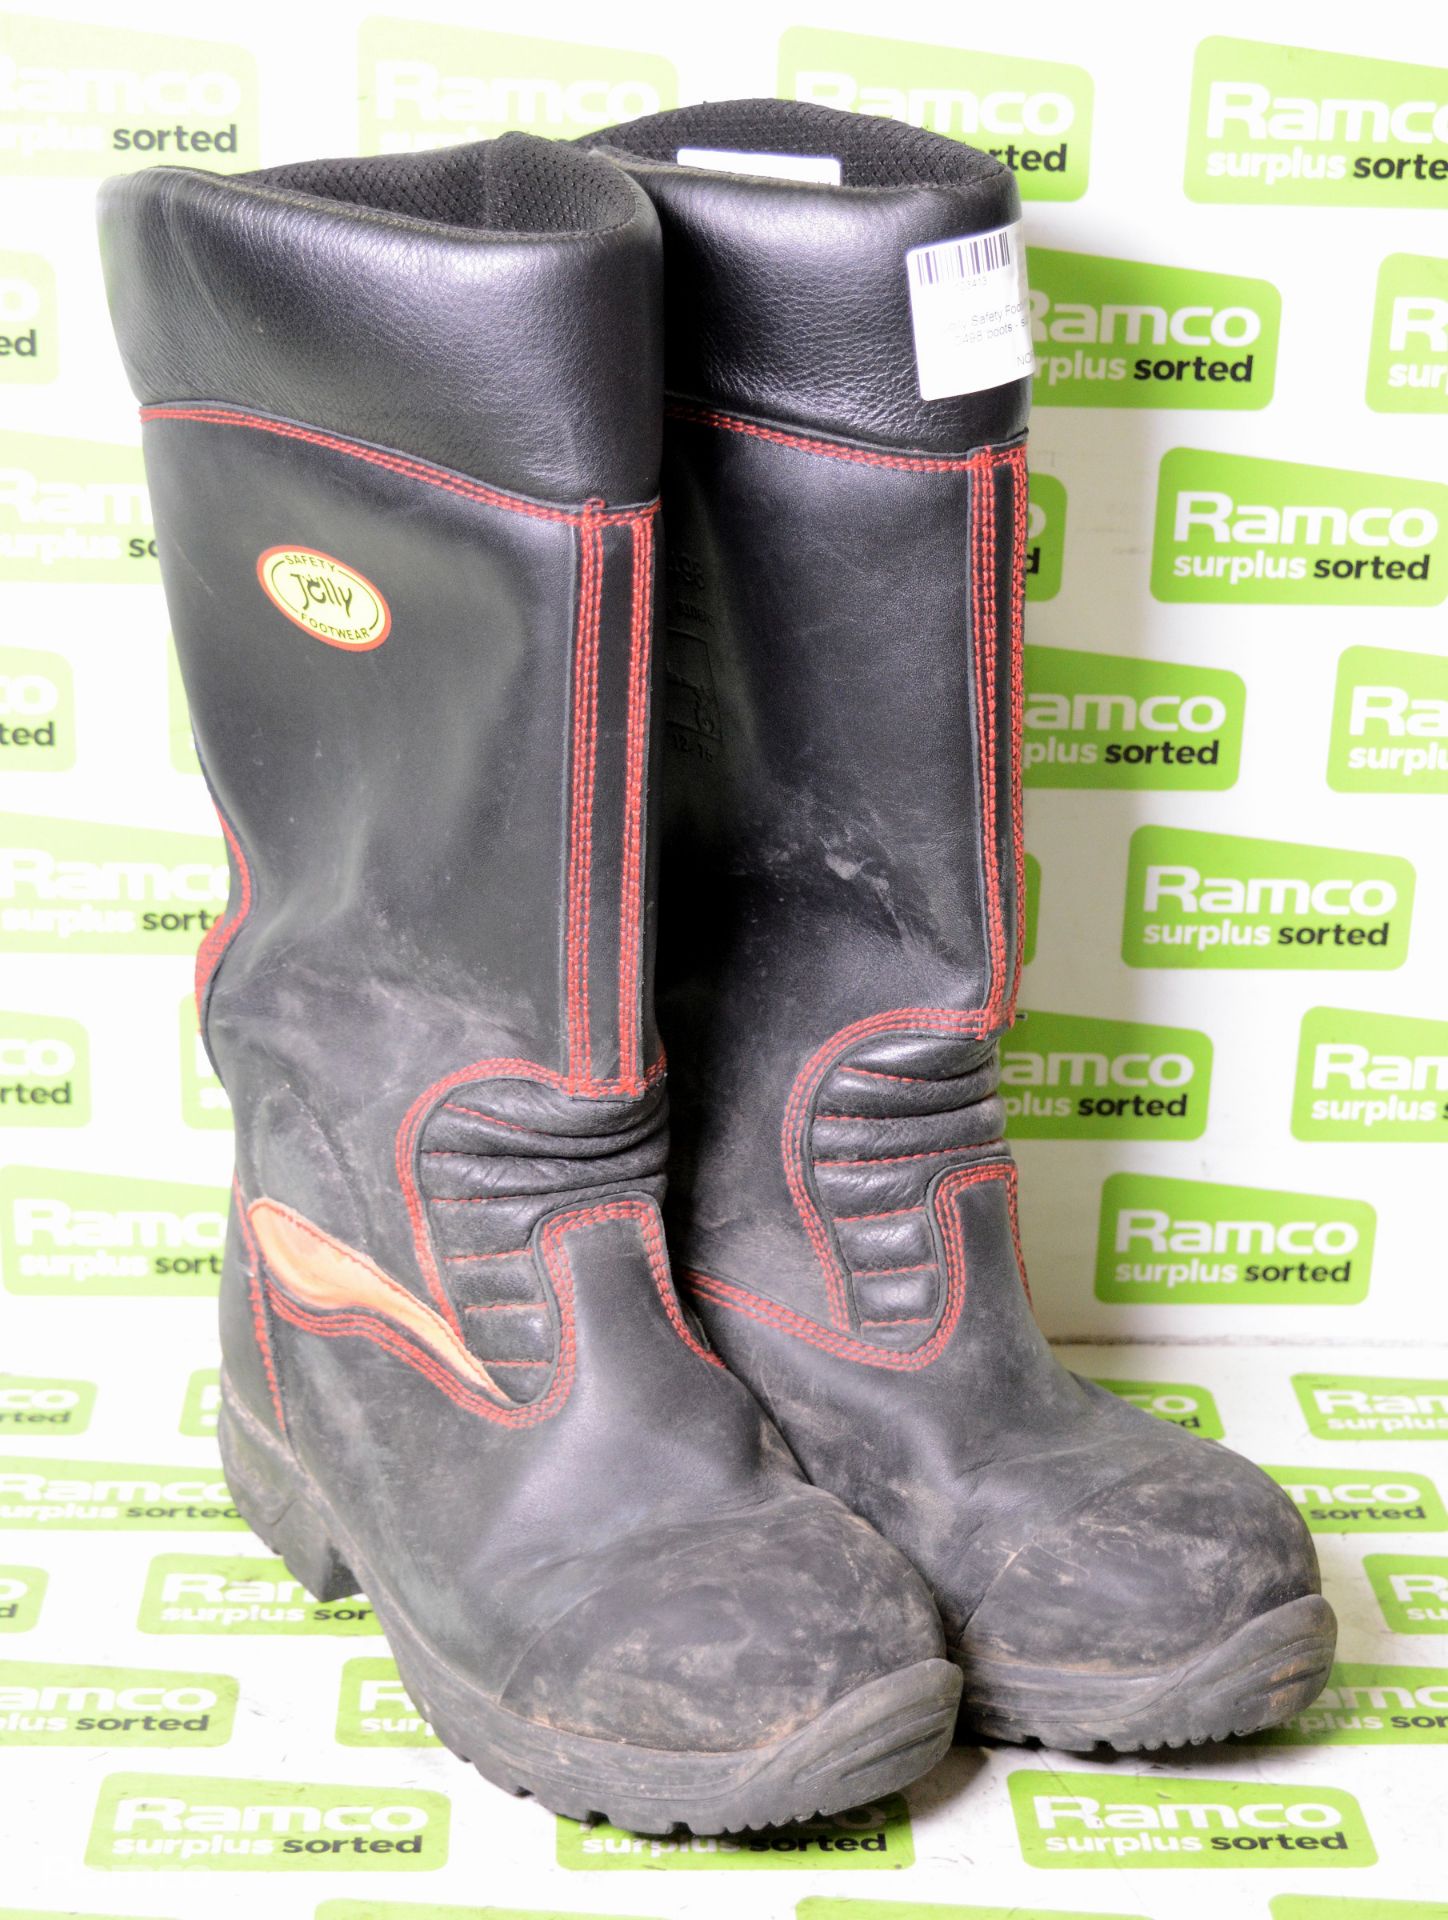 Jolly Safety Footwear CE 0498 boots - size: EU 41, UK 7